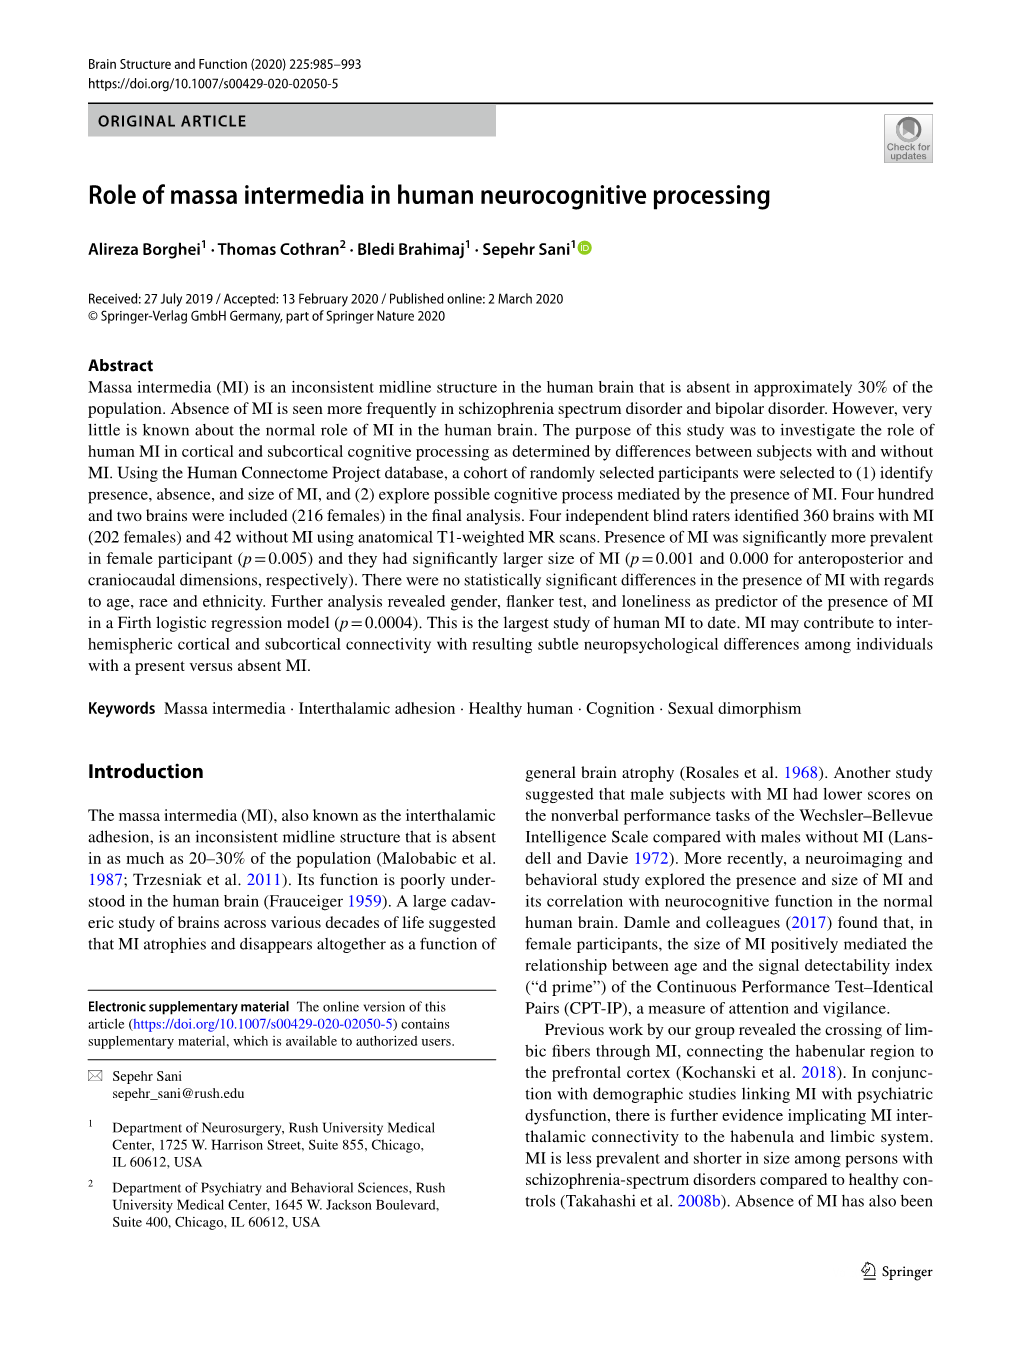 Role of Massa Intermedia in Human Neurocognitive Processing